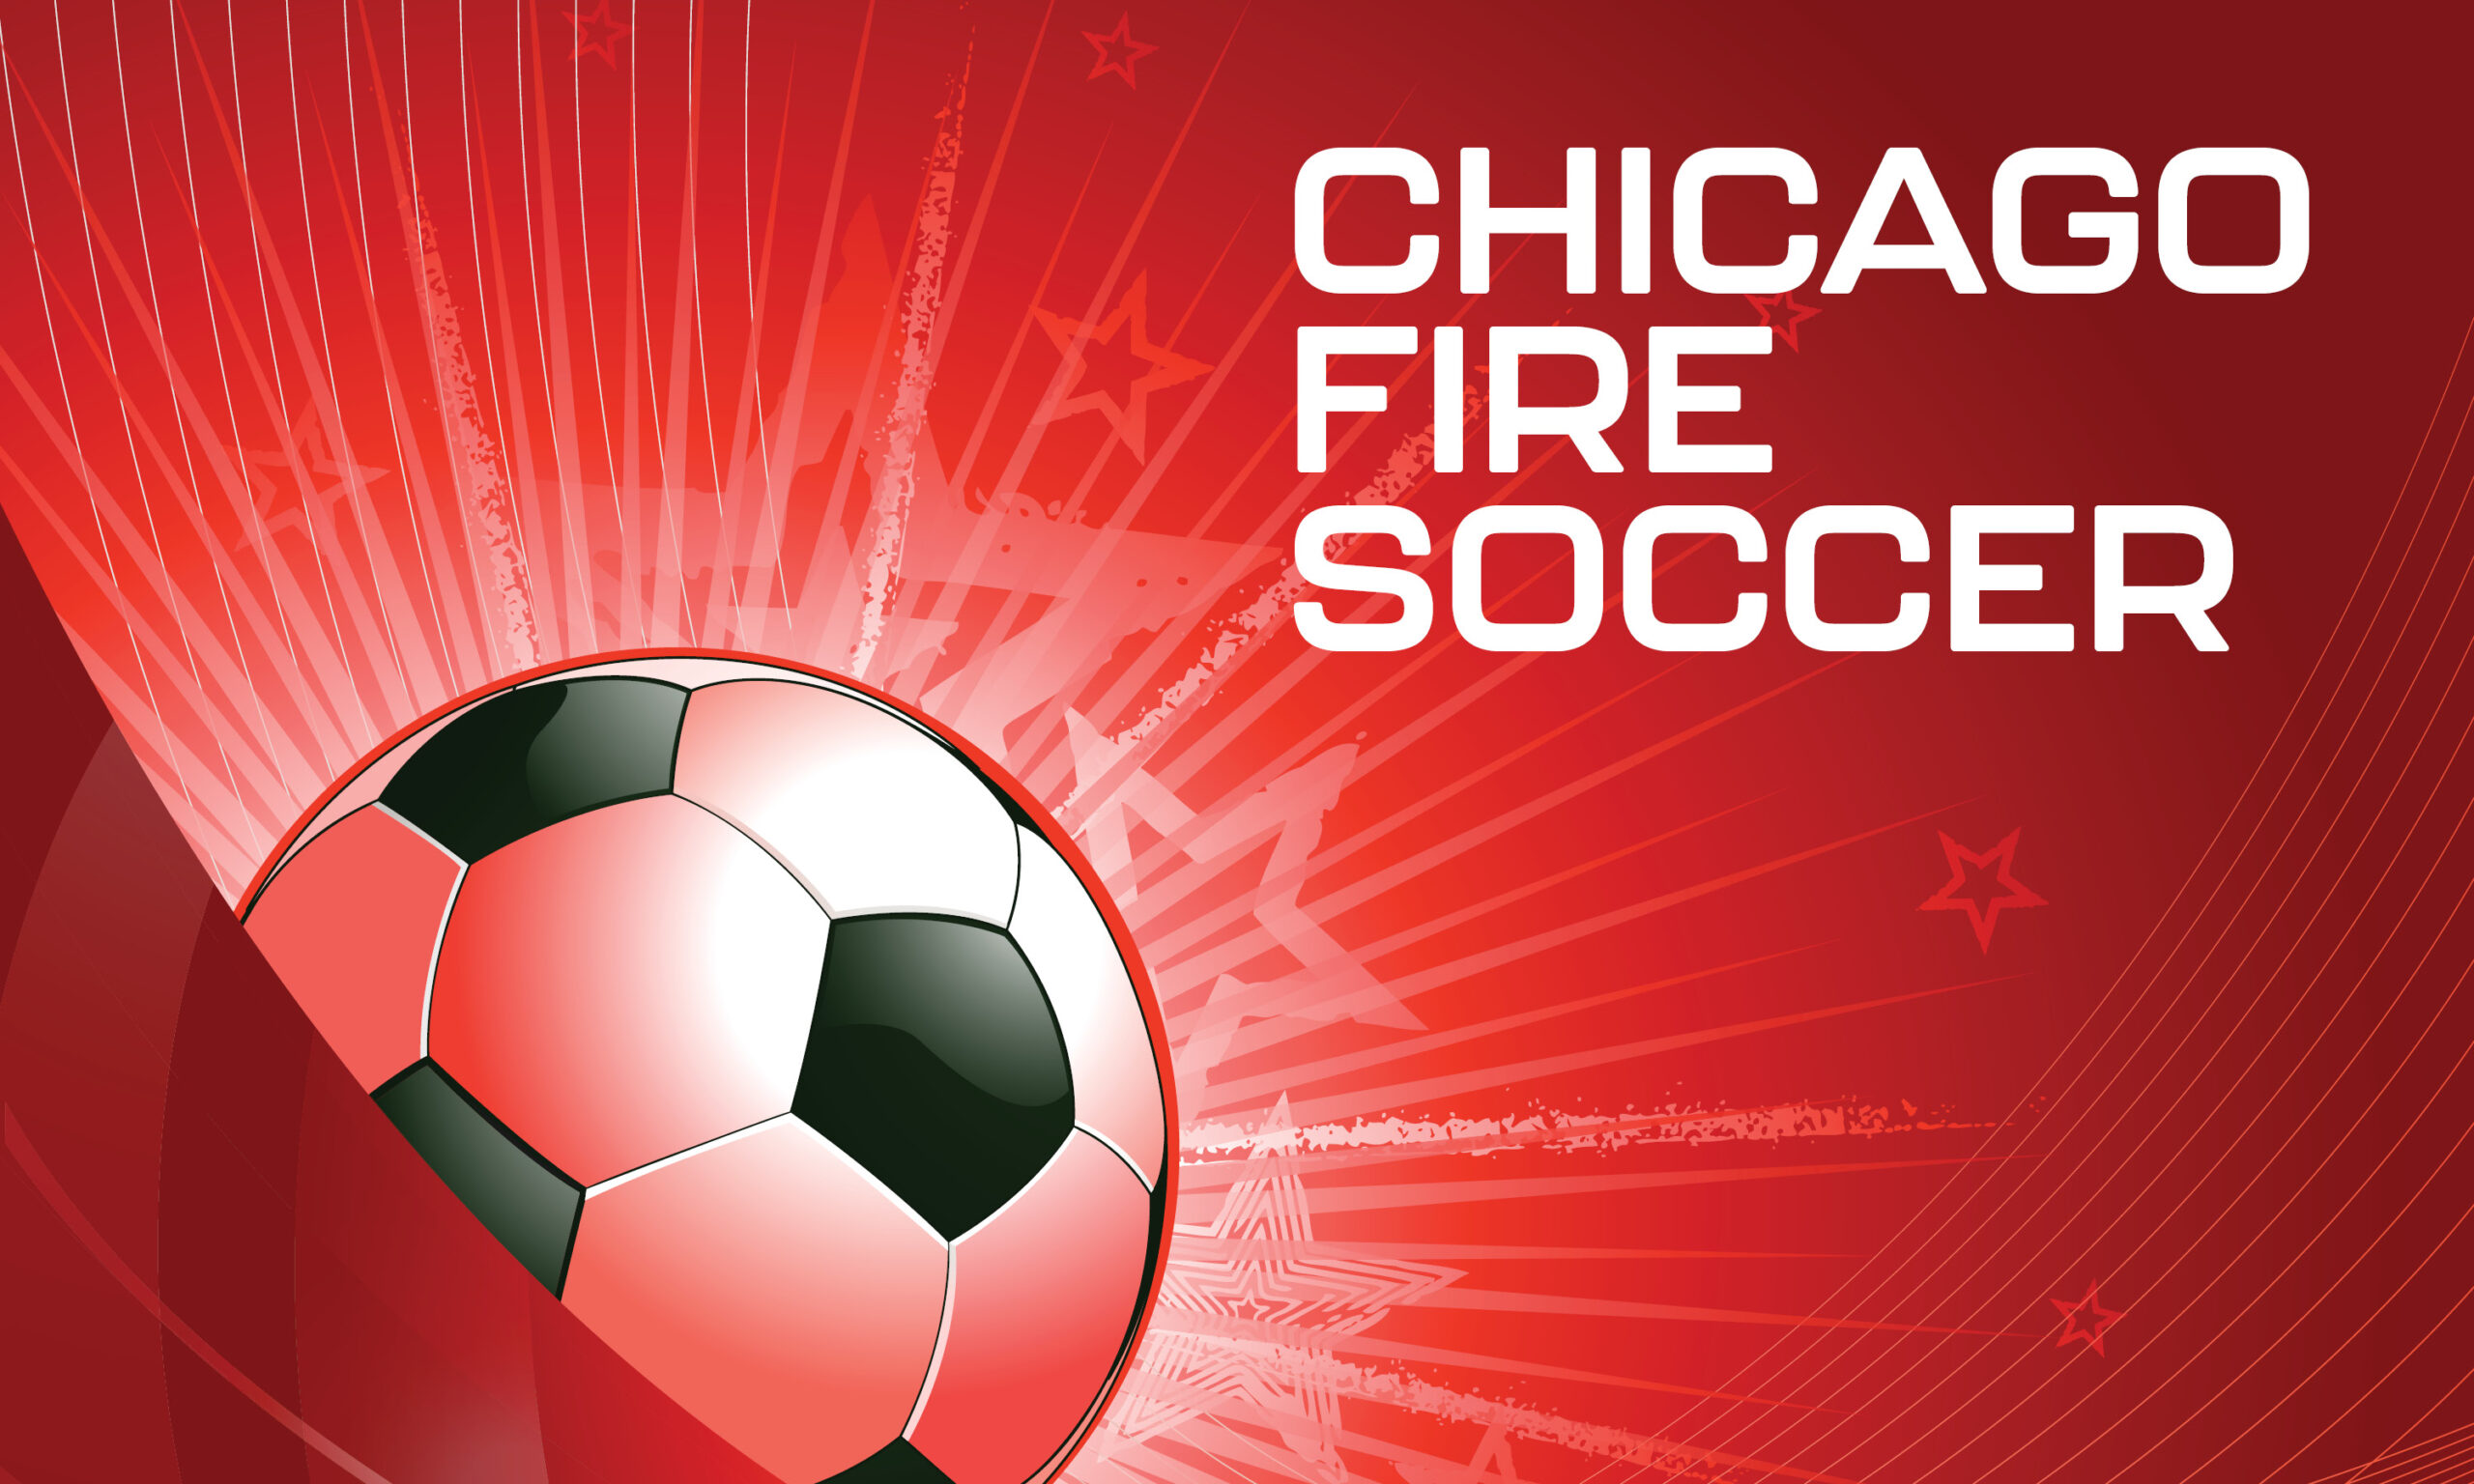 Illustration of soccer ball. Text: Chicago Fire Soccer